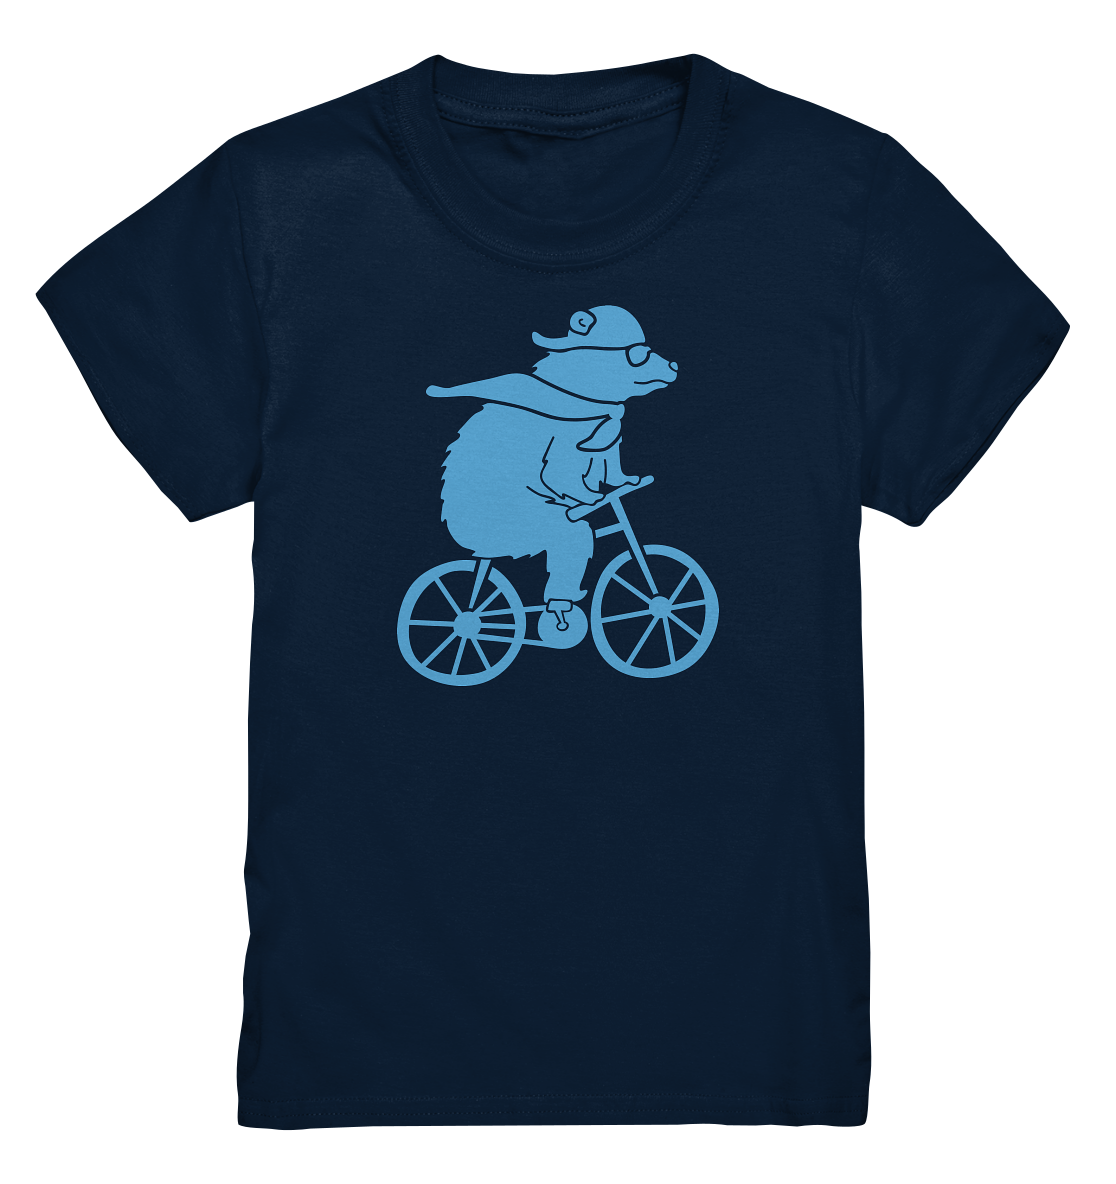 Cyclobear - Kids Premium Shirt